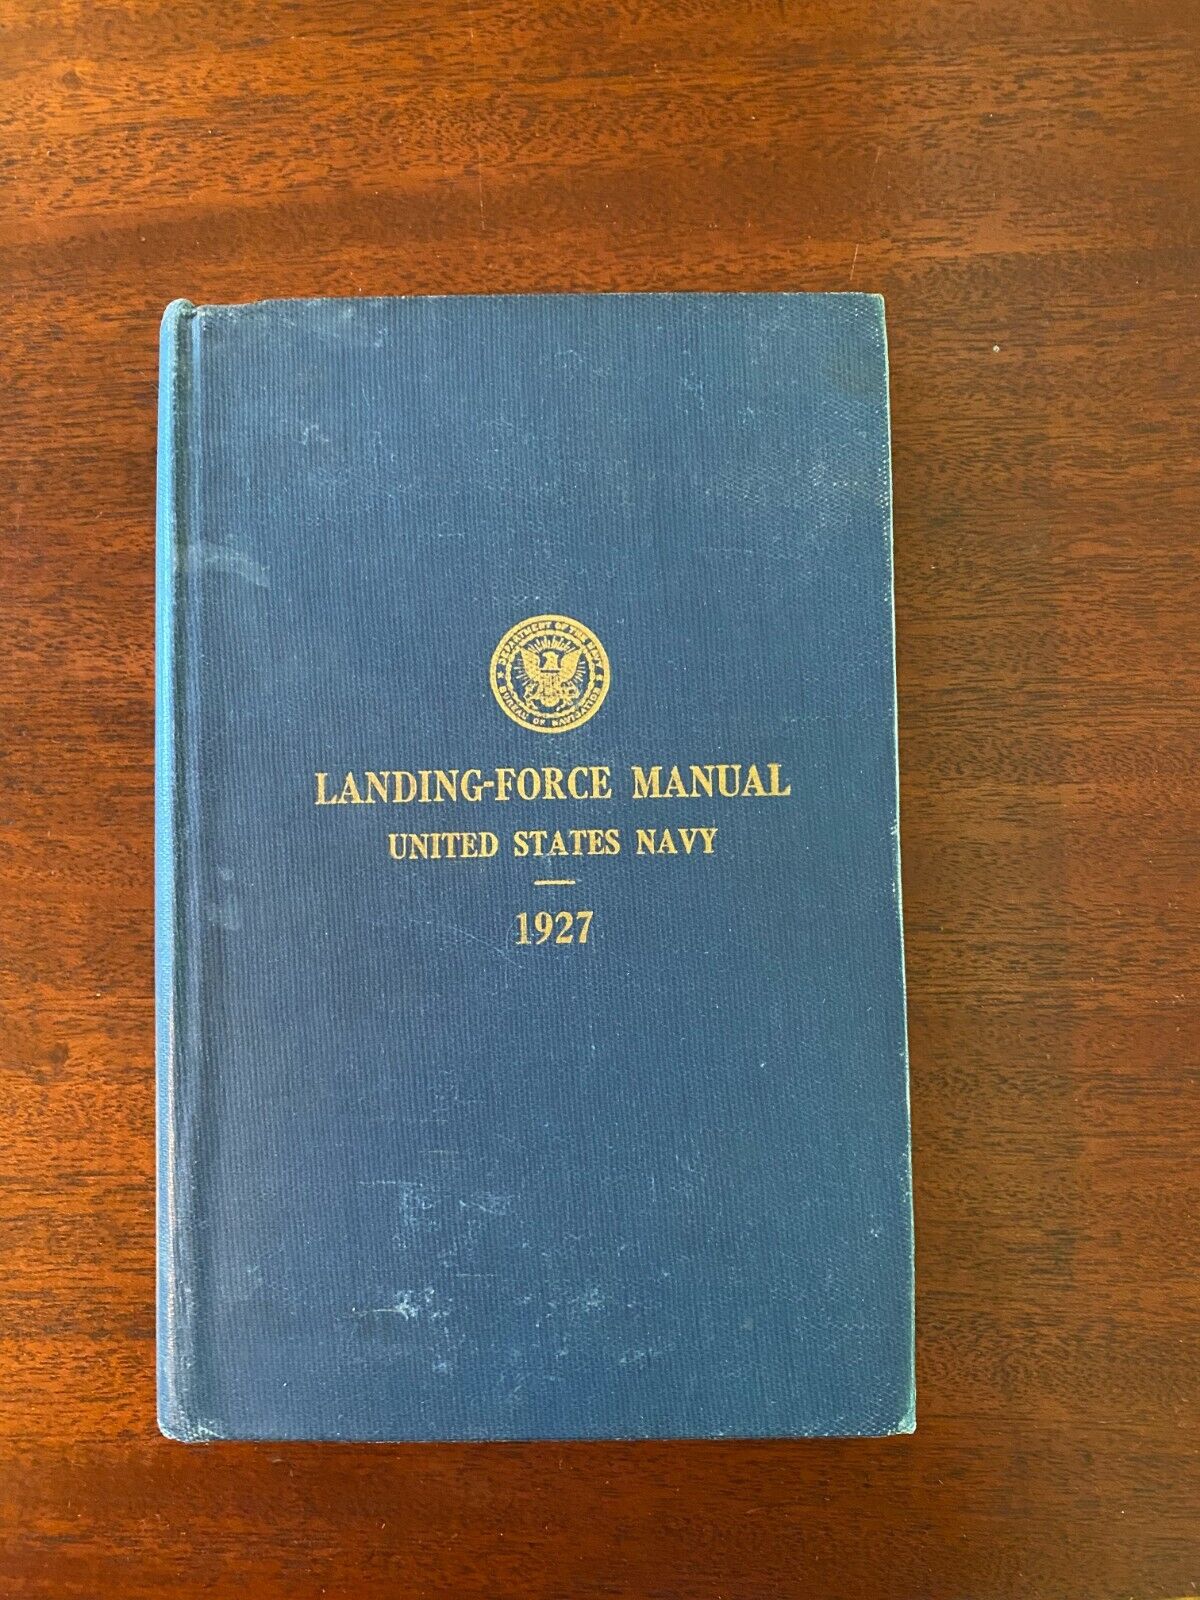 Vintage 1927 Landing-Force Manual United States Navy 